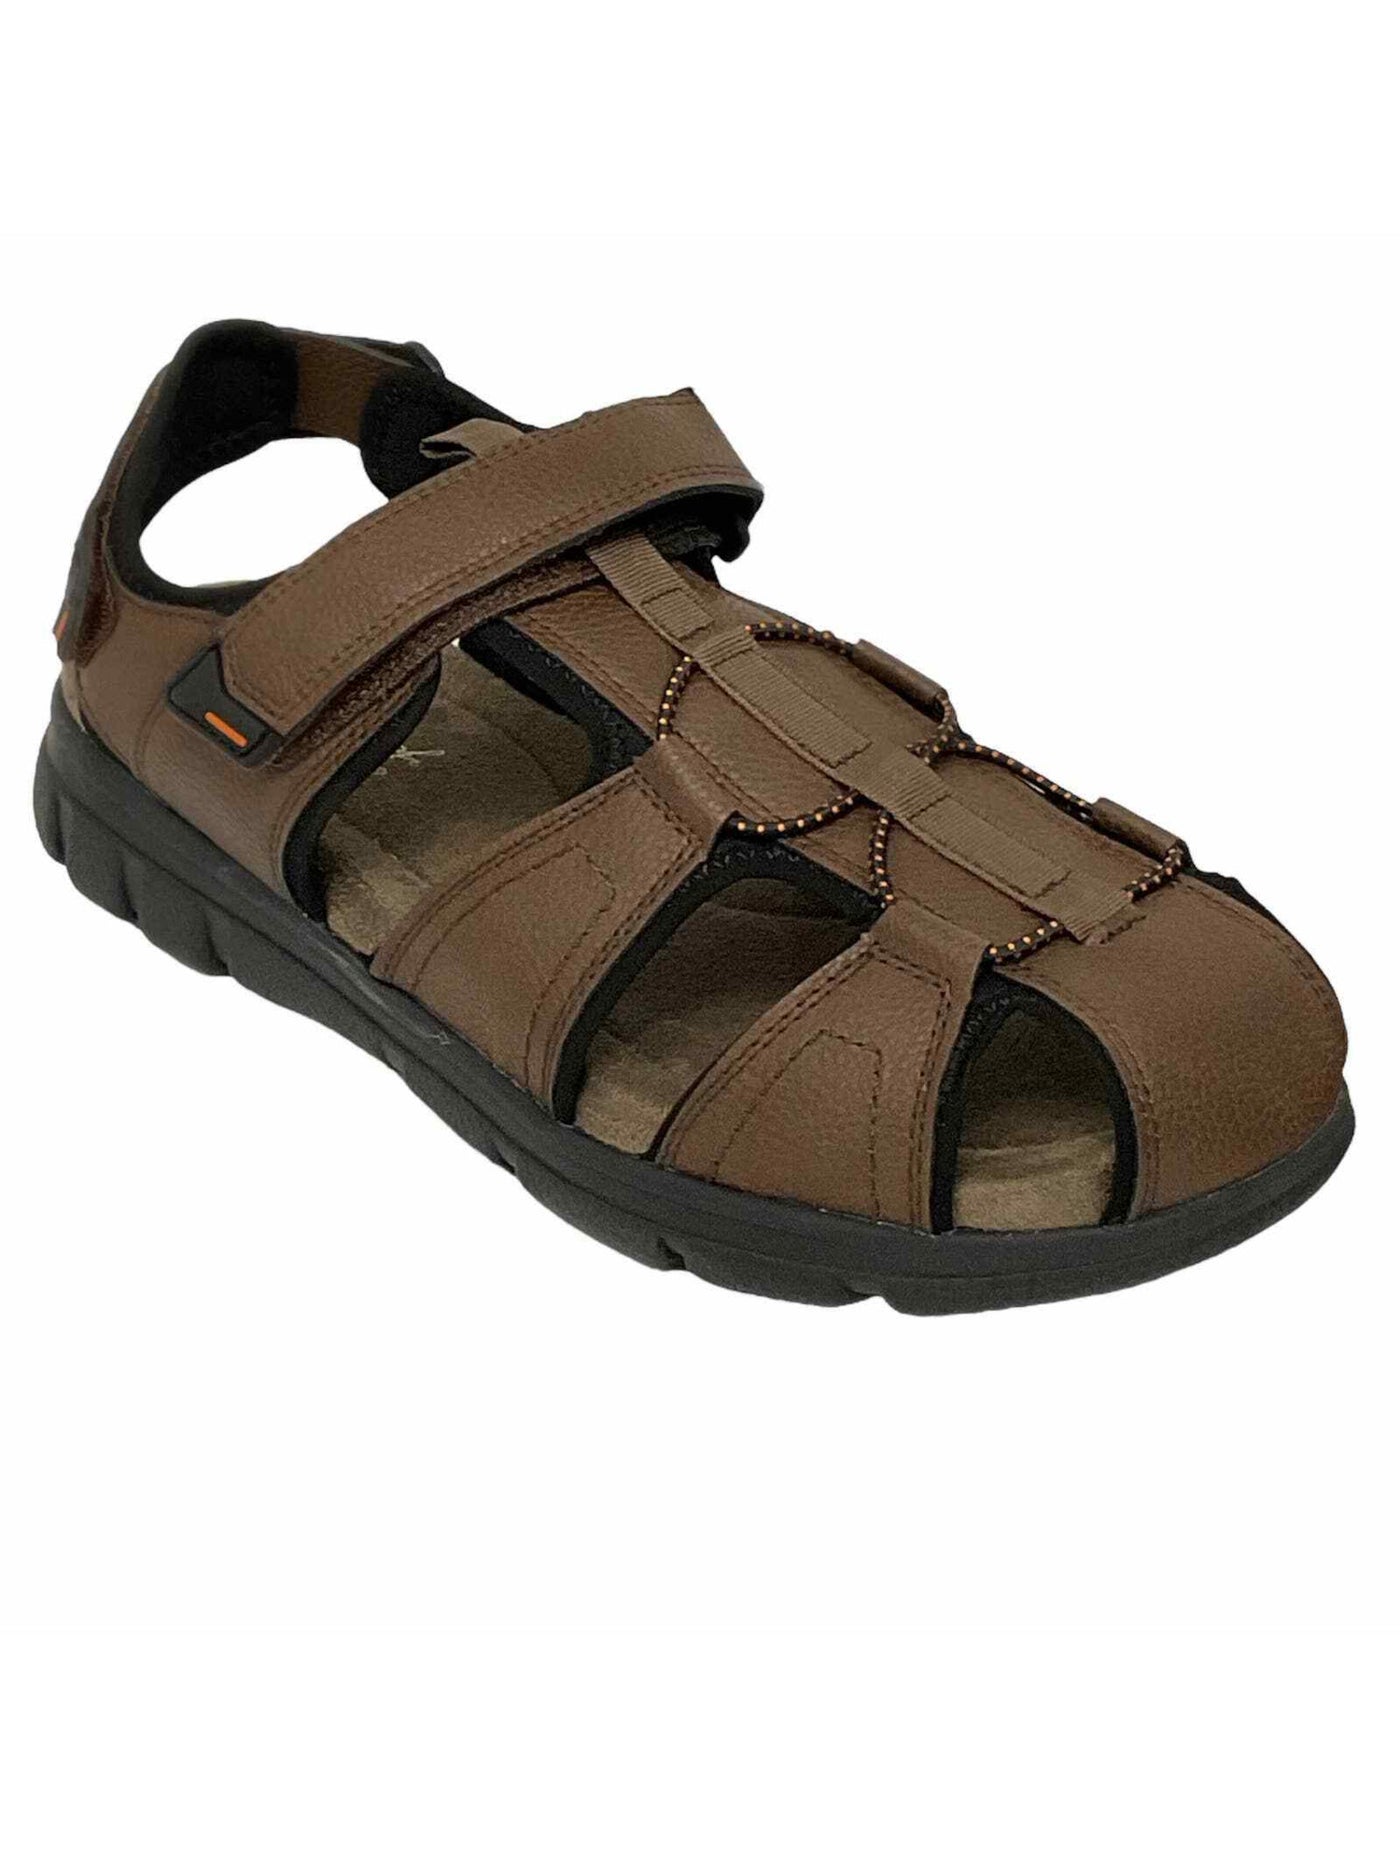 WEATHERPROOF VINTAGE Mens Brown Caged Cushioned Adjustable Cory Round Toe Platform Sandals Shoes 13 M